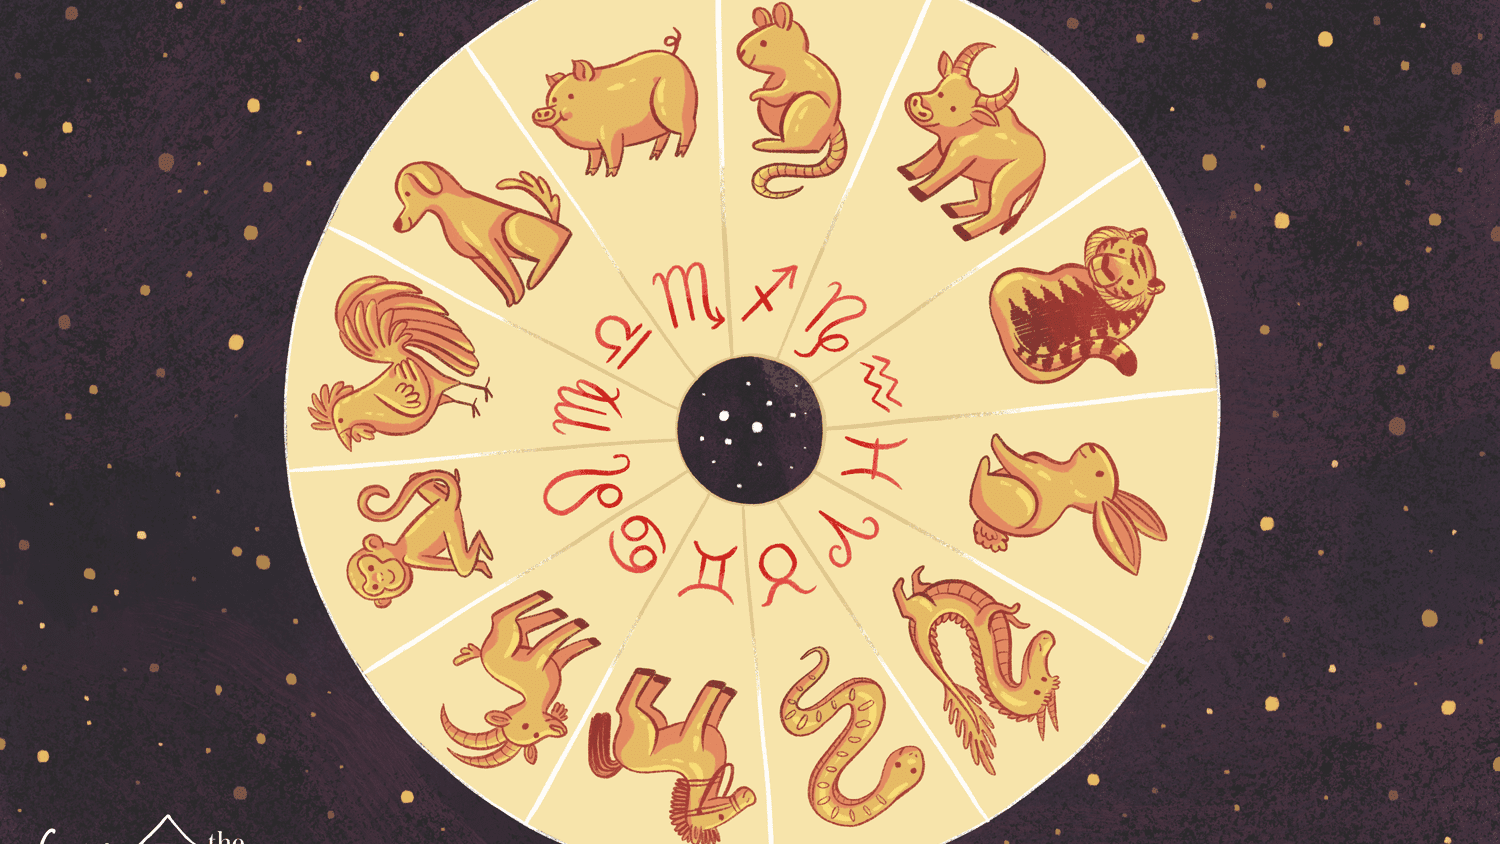 astrological sign for october 9th